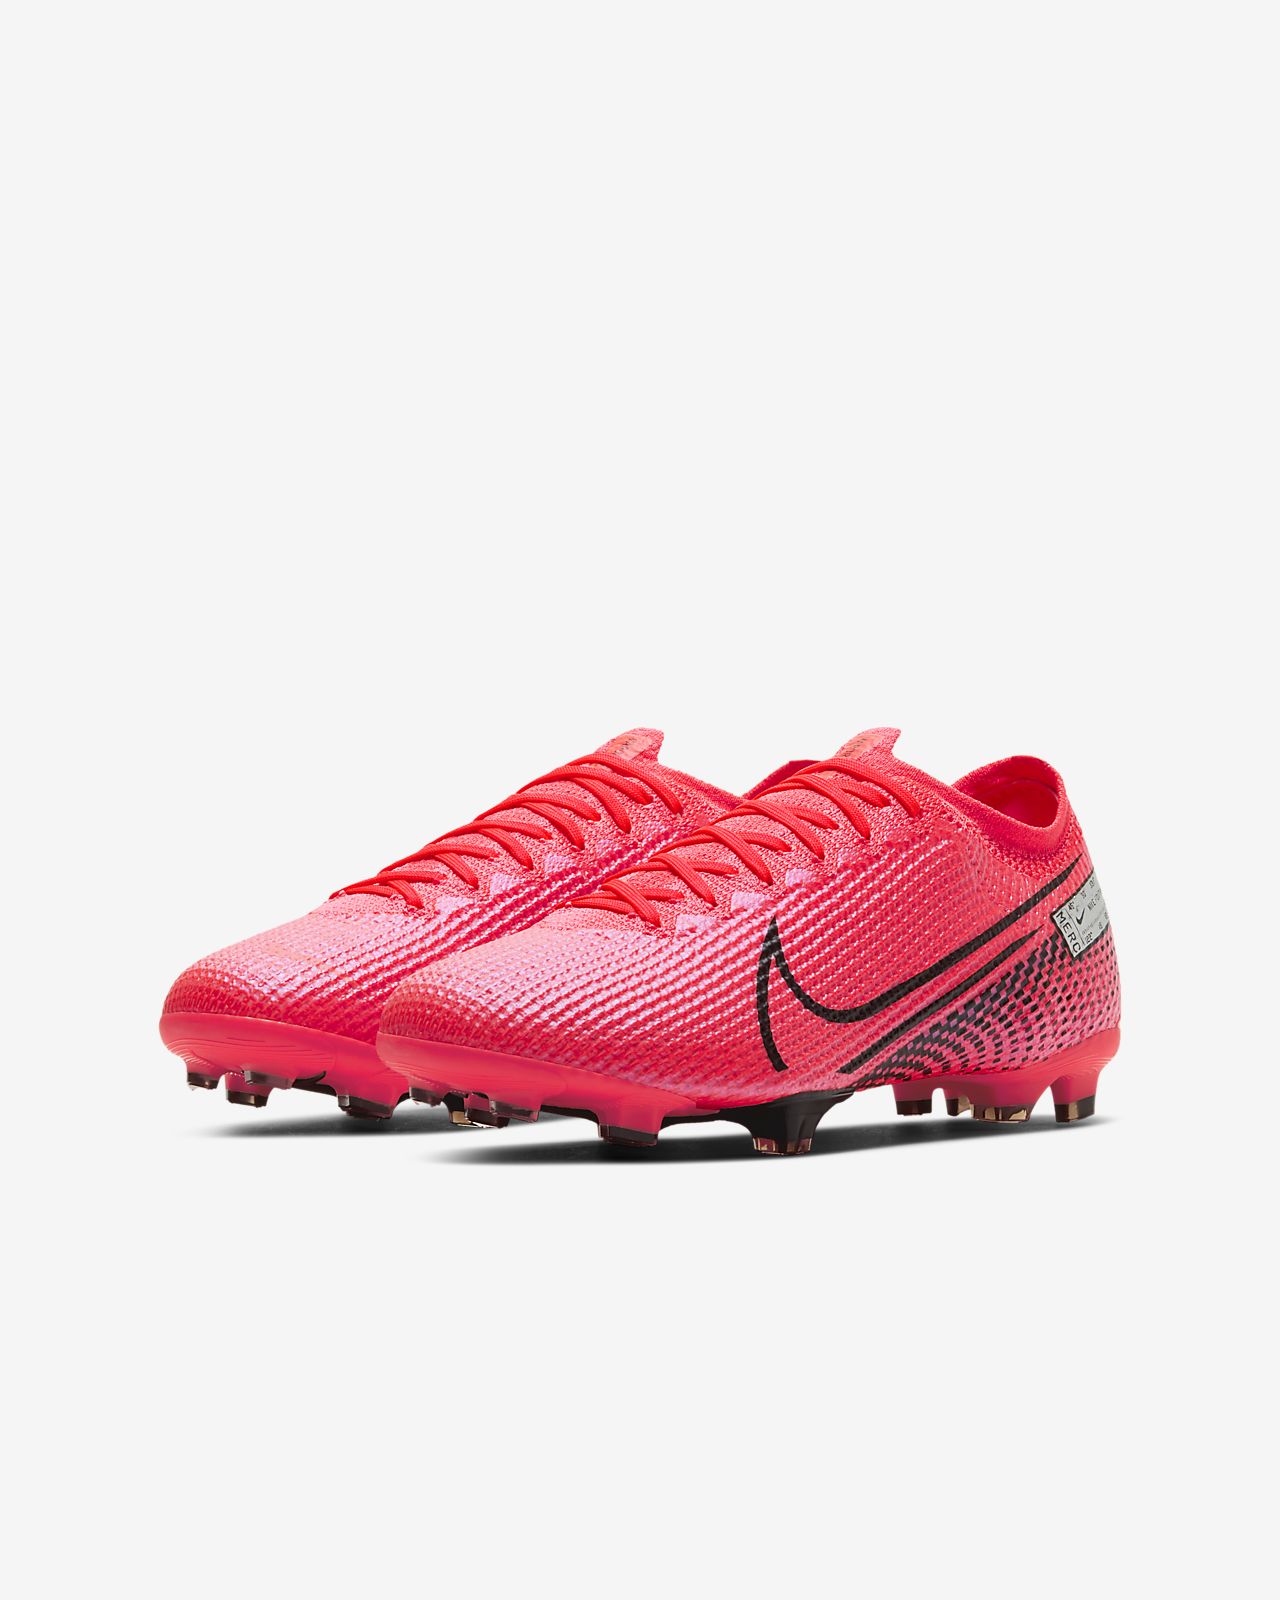 Nike Mercurial Vapor 13 Buy Cheap Football Boots Soccer.